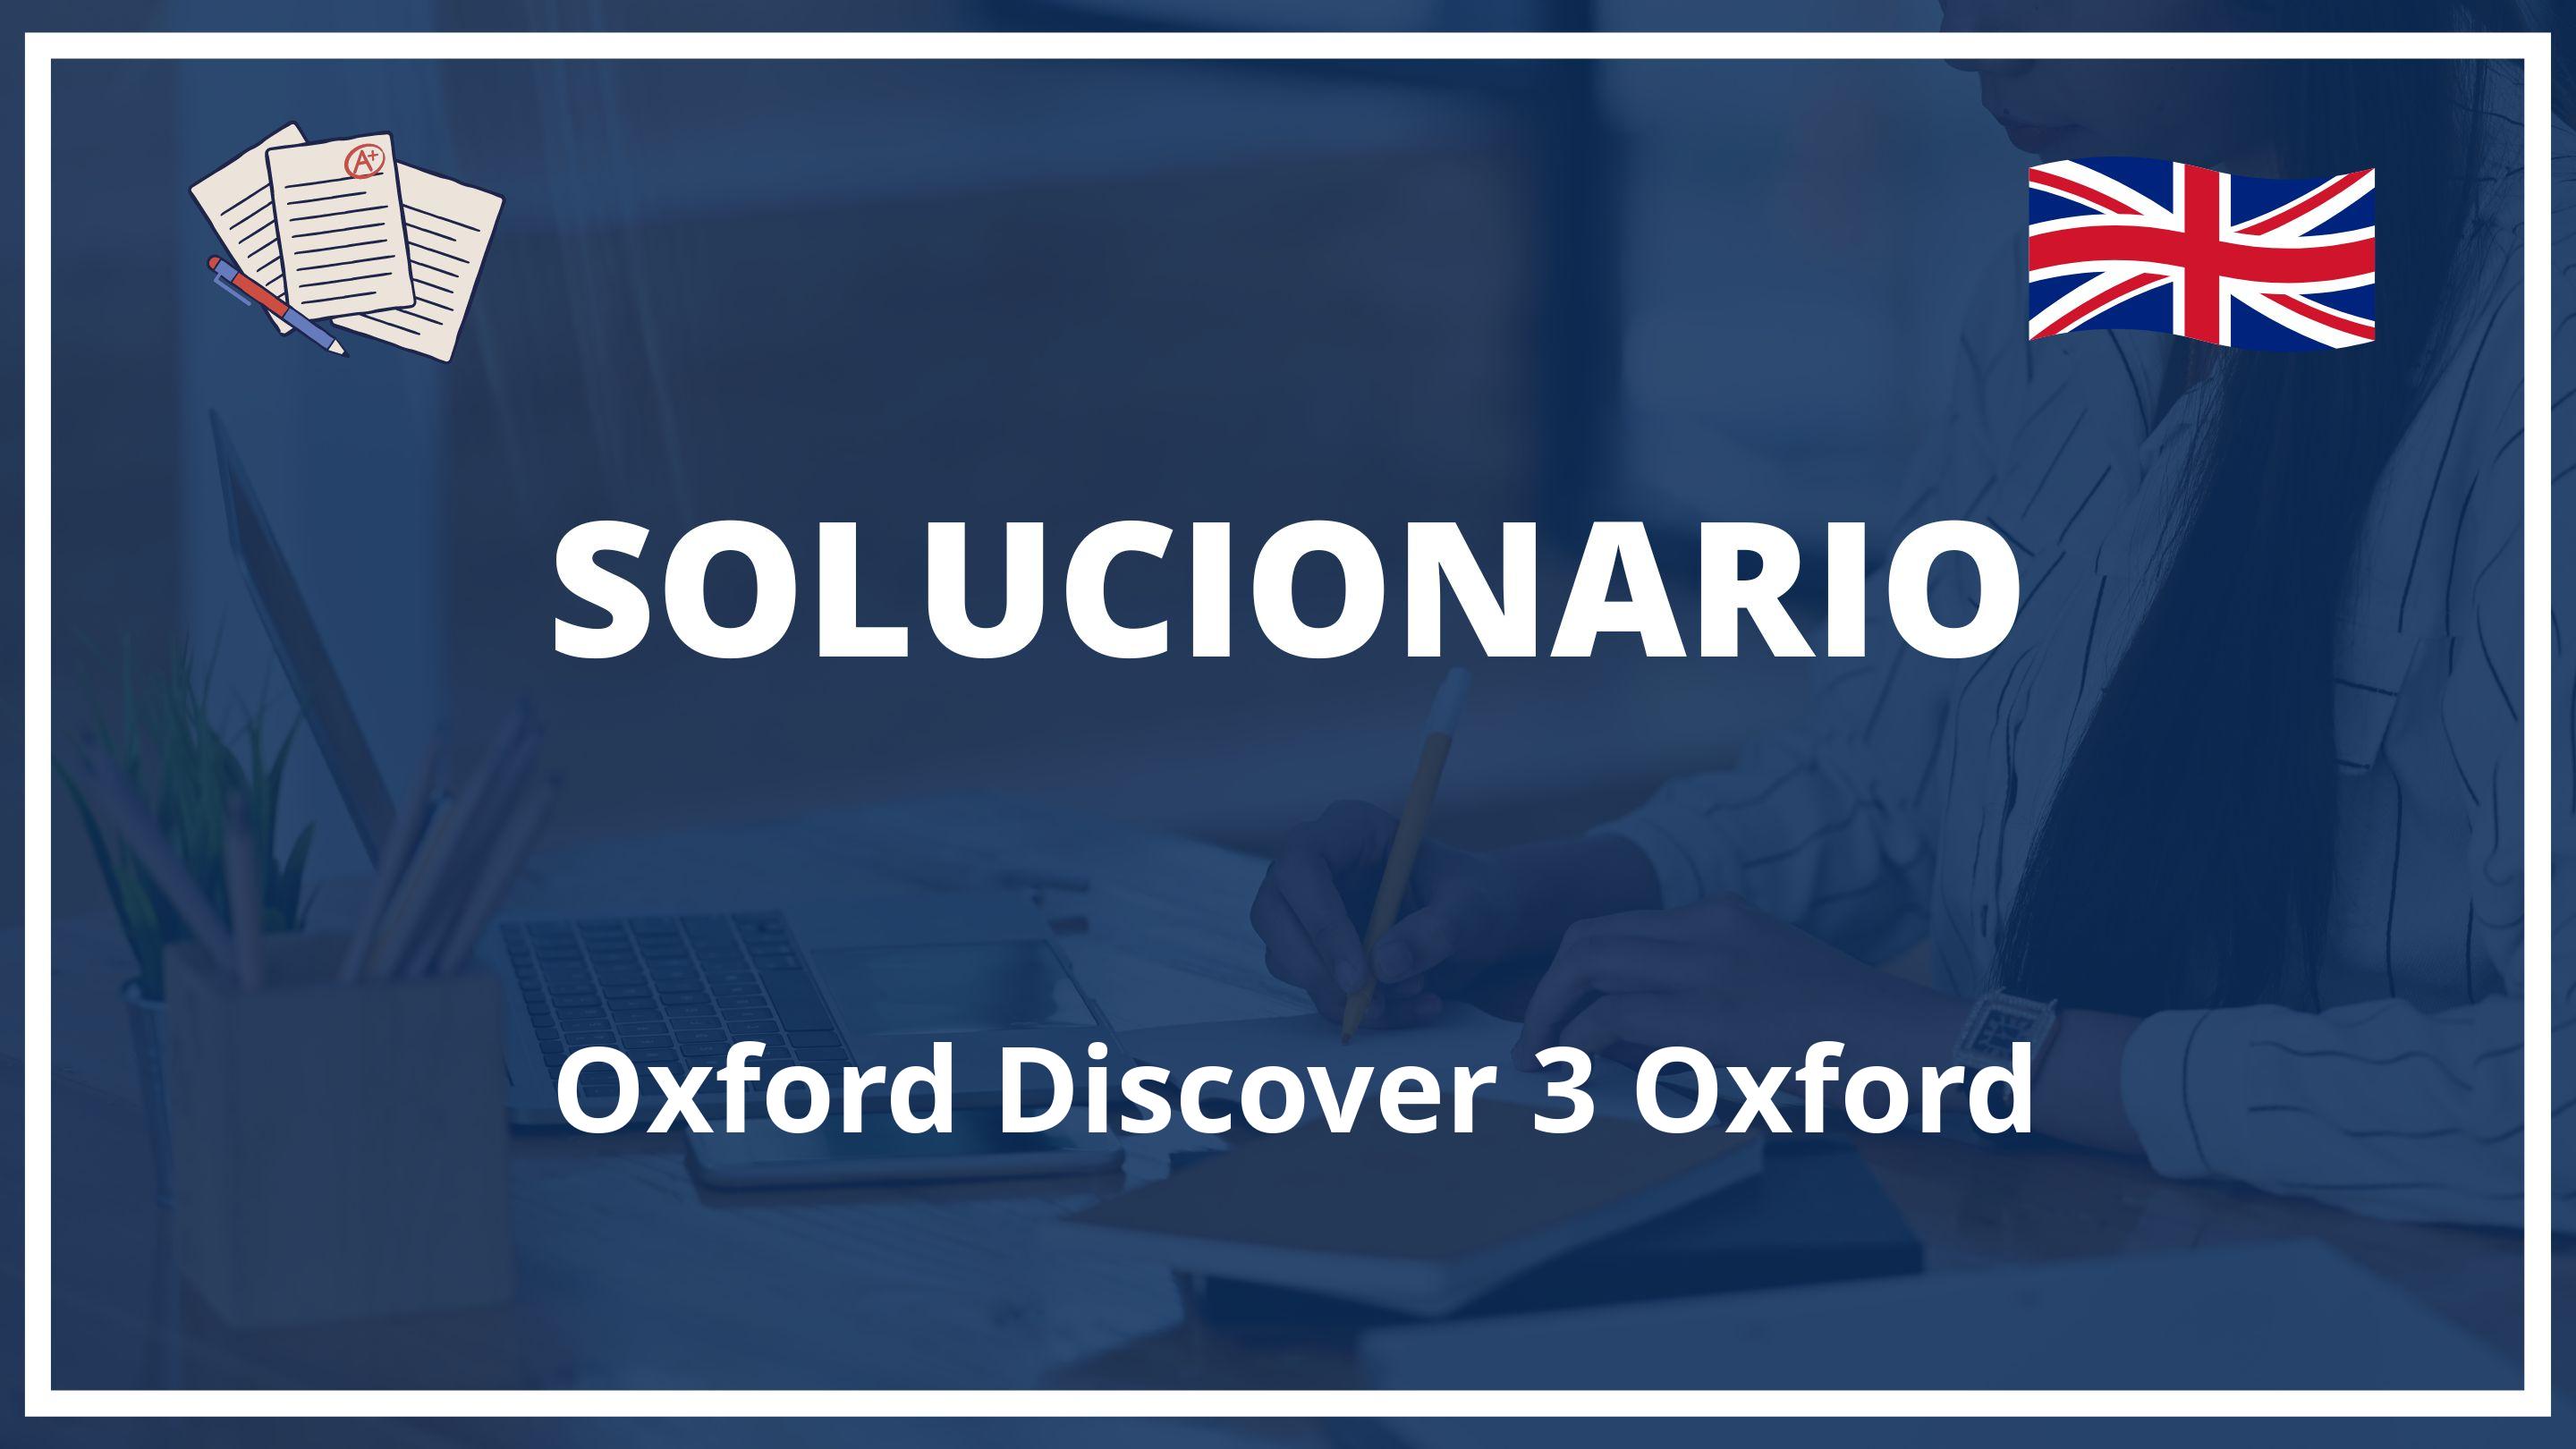 Oxford Discover 3 Oxford